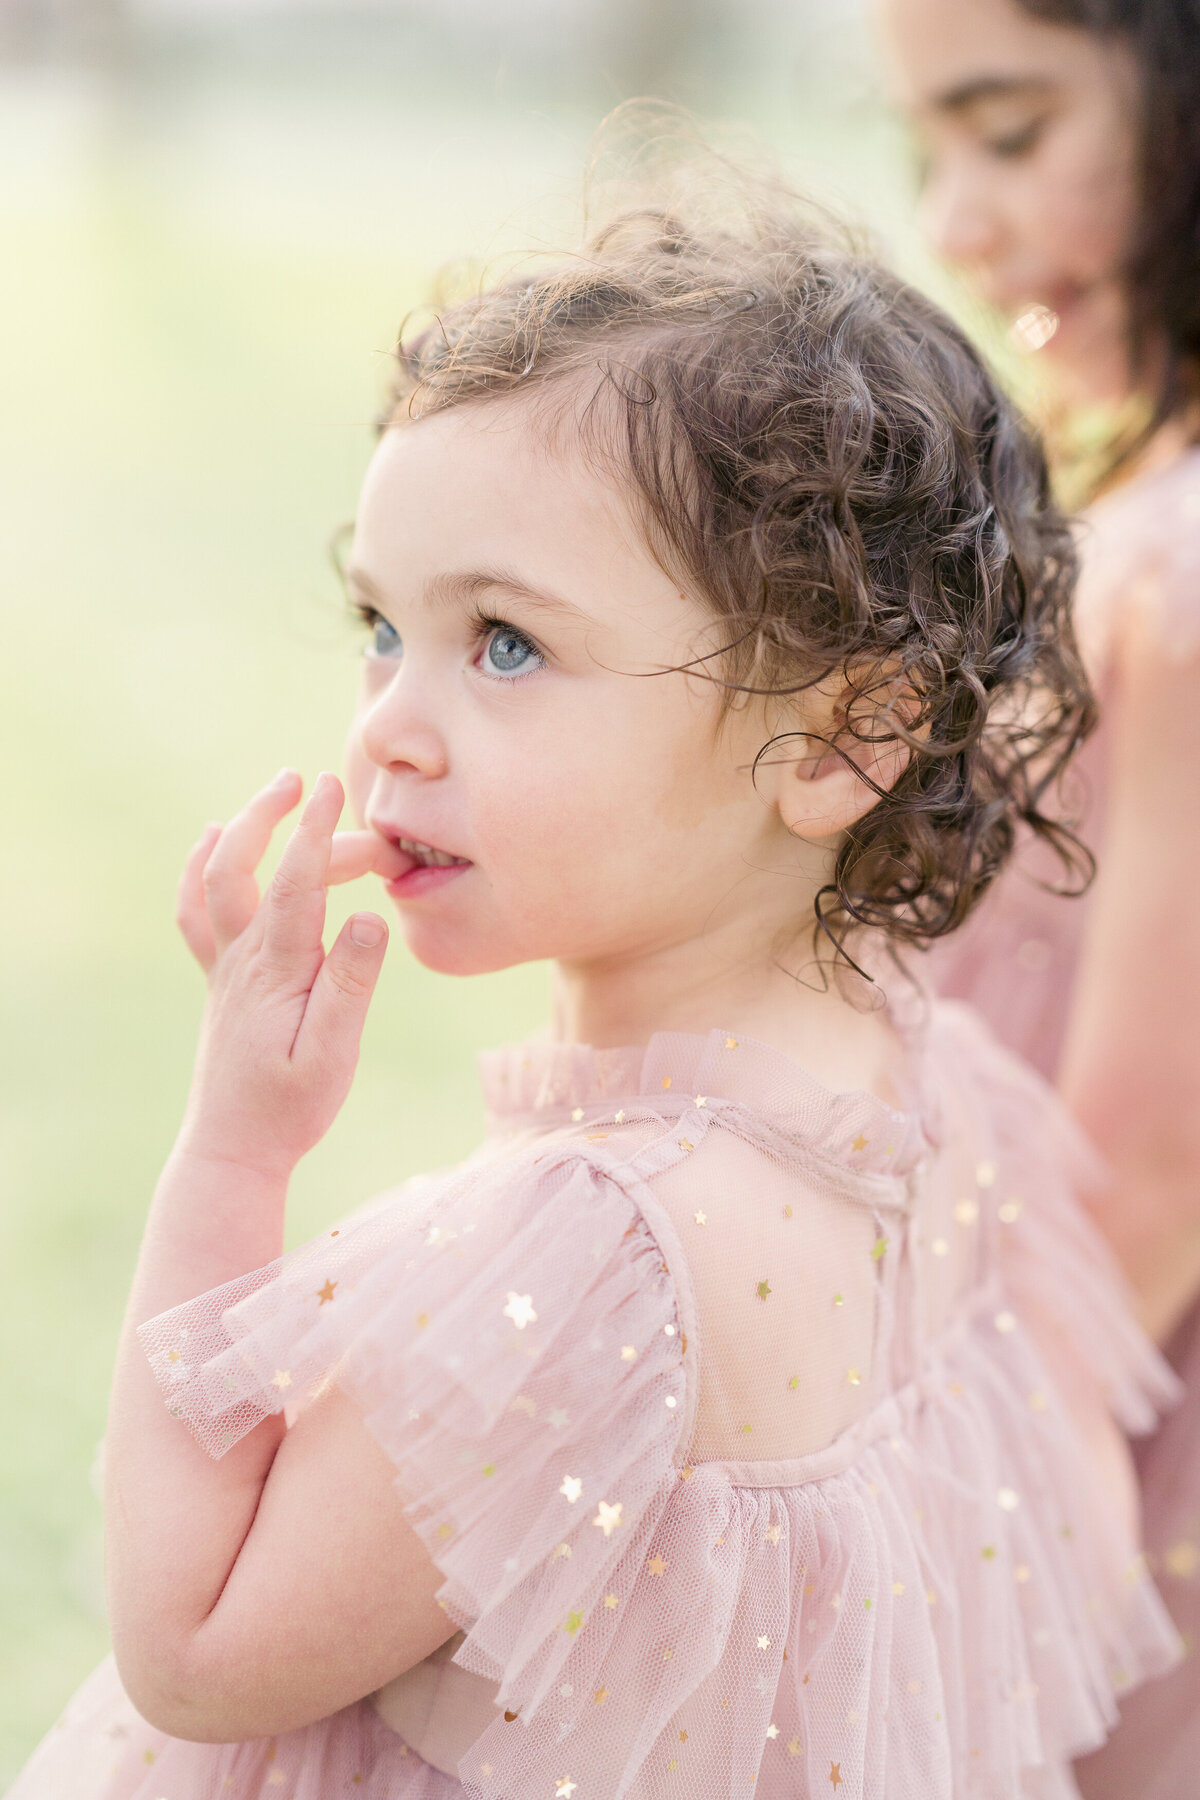 Courtney-Landrum-Photography-Motherhood-Cherry-Blossoms-10